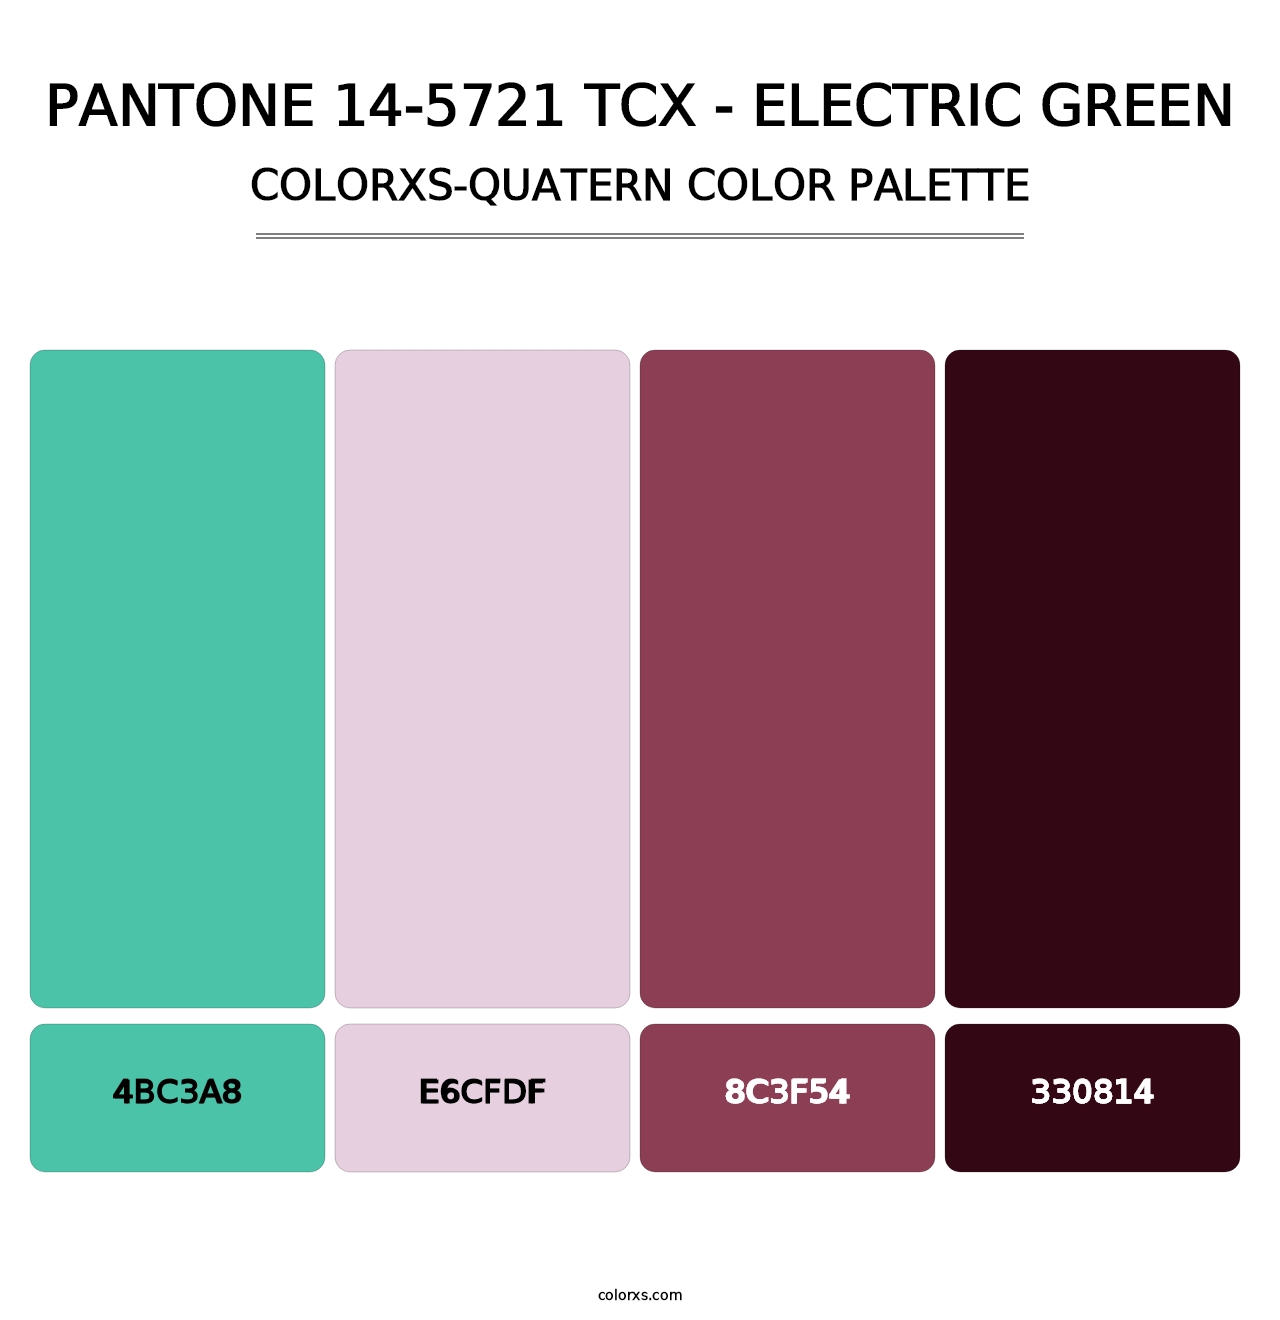 PANTONE 14-5721 TCX - Electric Green - Colorxs Quatern Palette